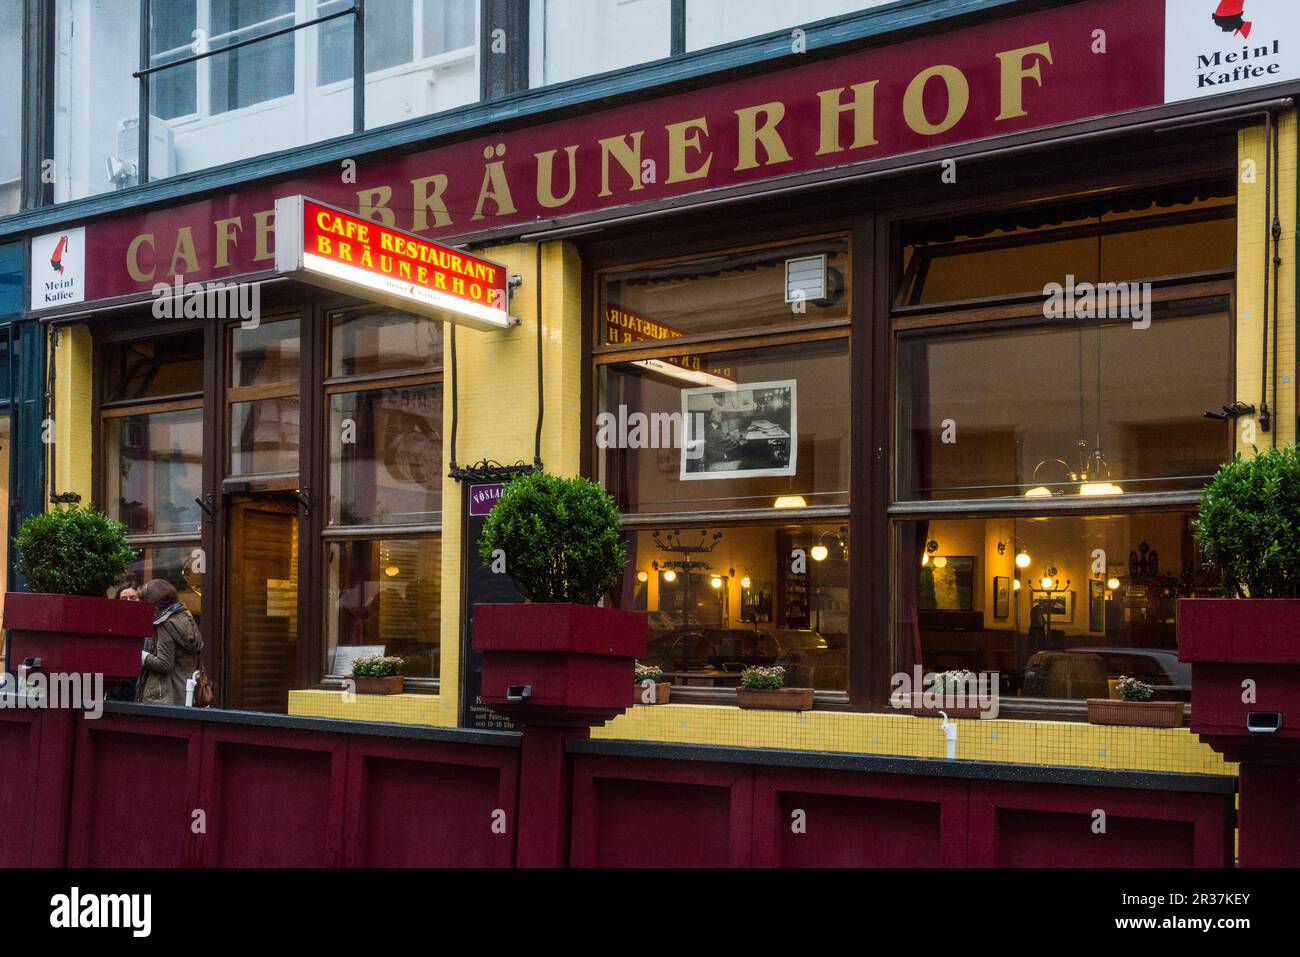 Cafe Braeuner Hof, Vienna, Braeuner Hof, Austria Stock Photo